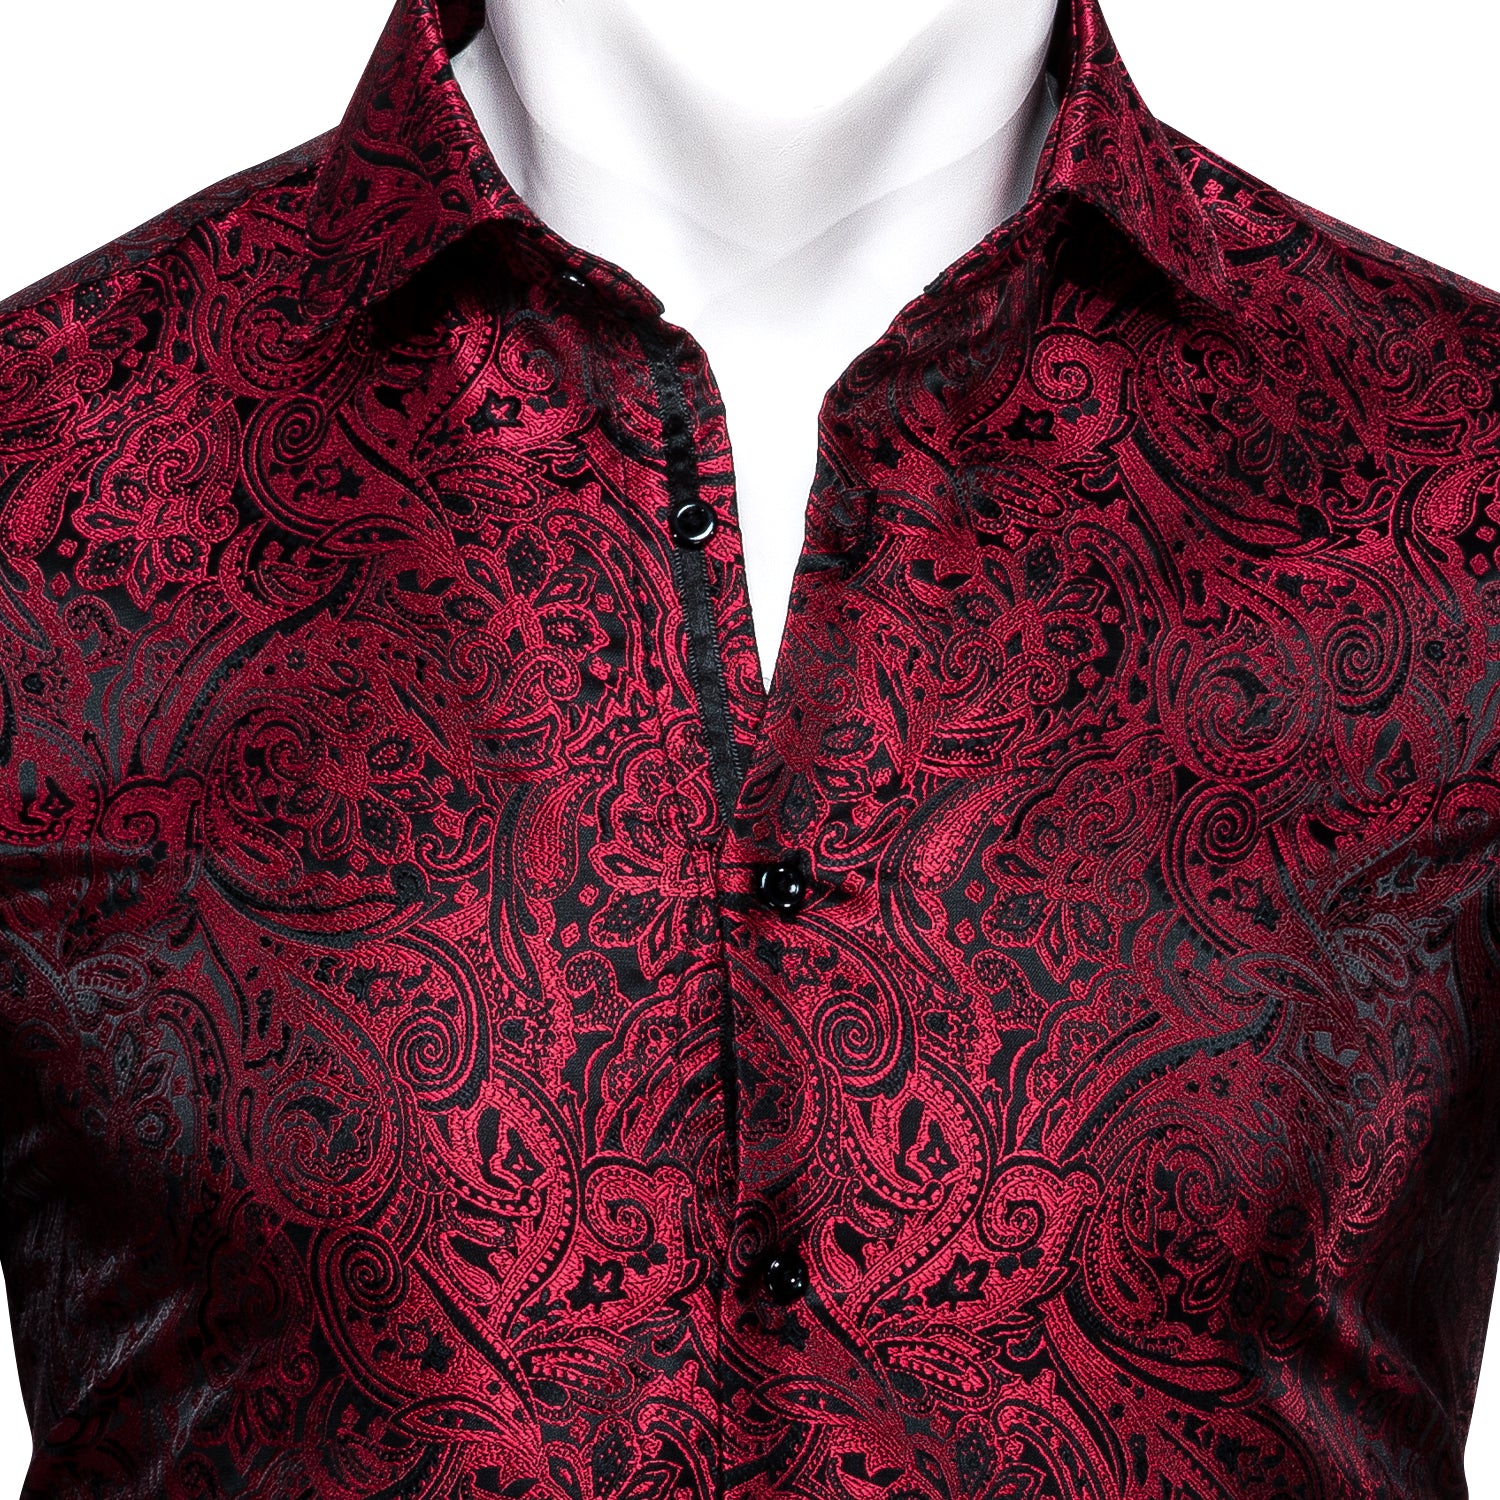 Barry.wang Button Down Shirt Red Black Paisley Silk Men's Shirt Formal